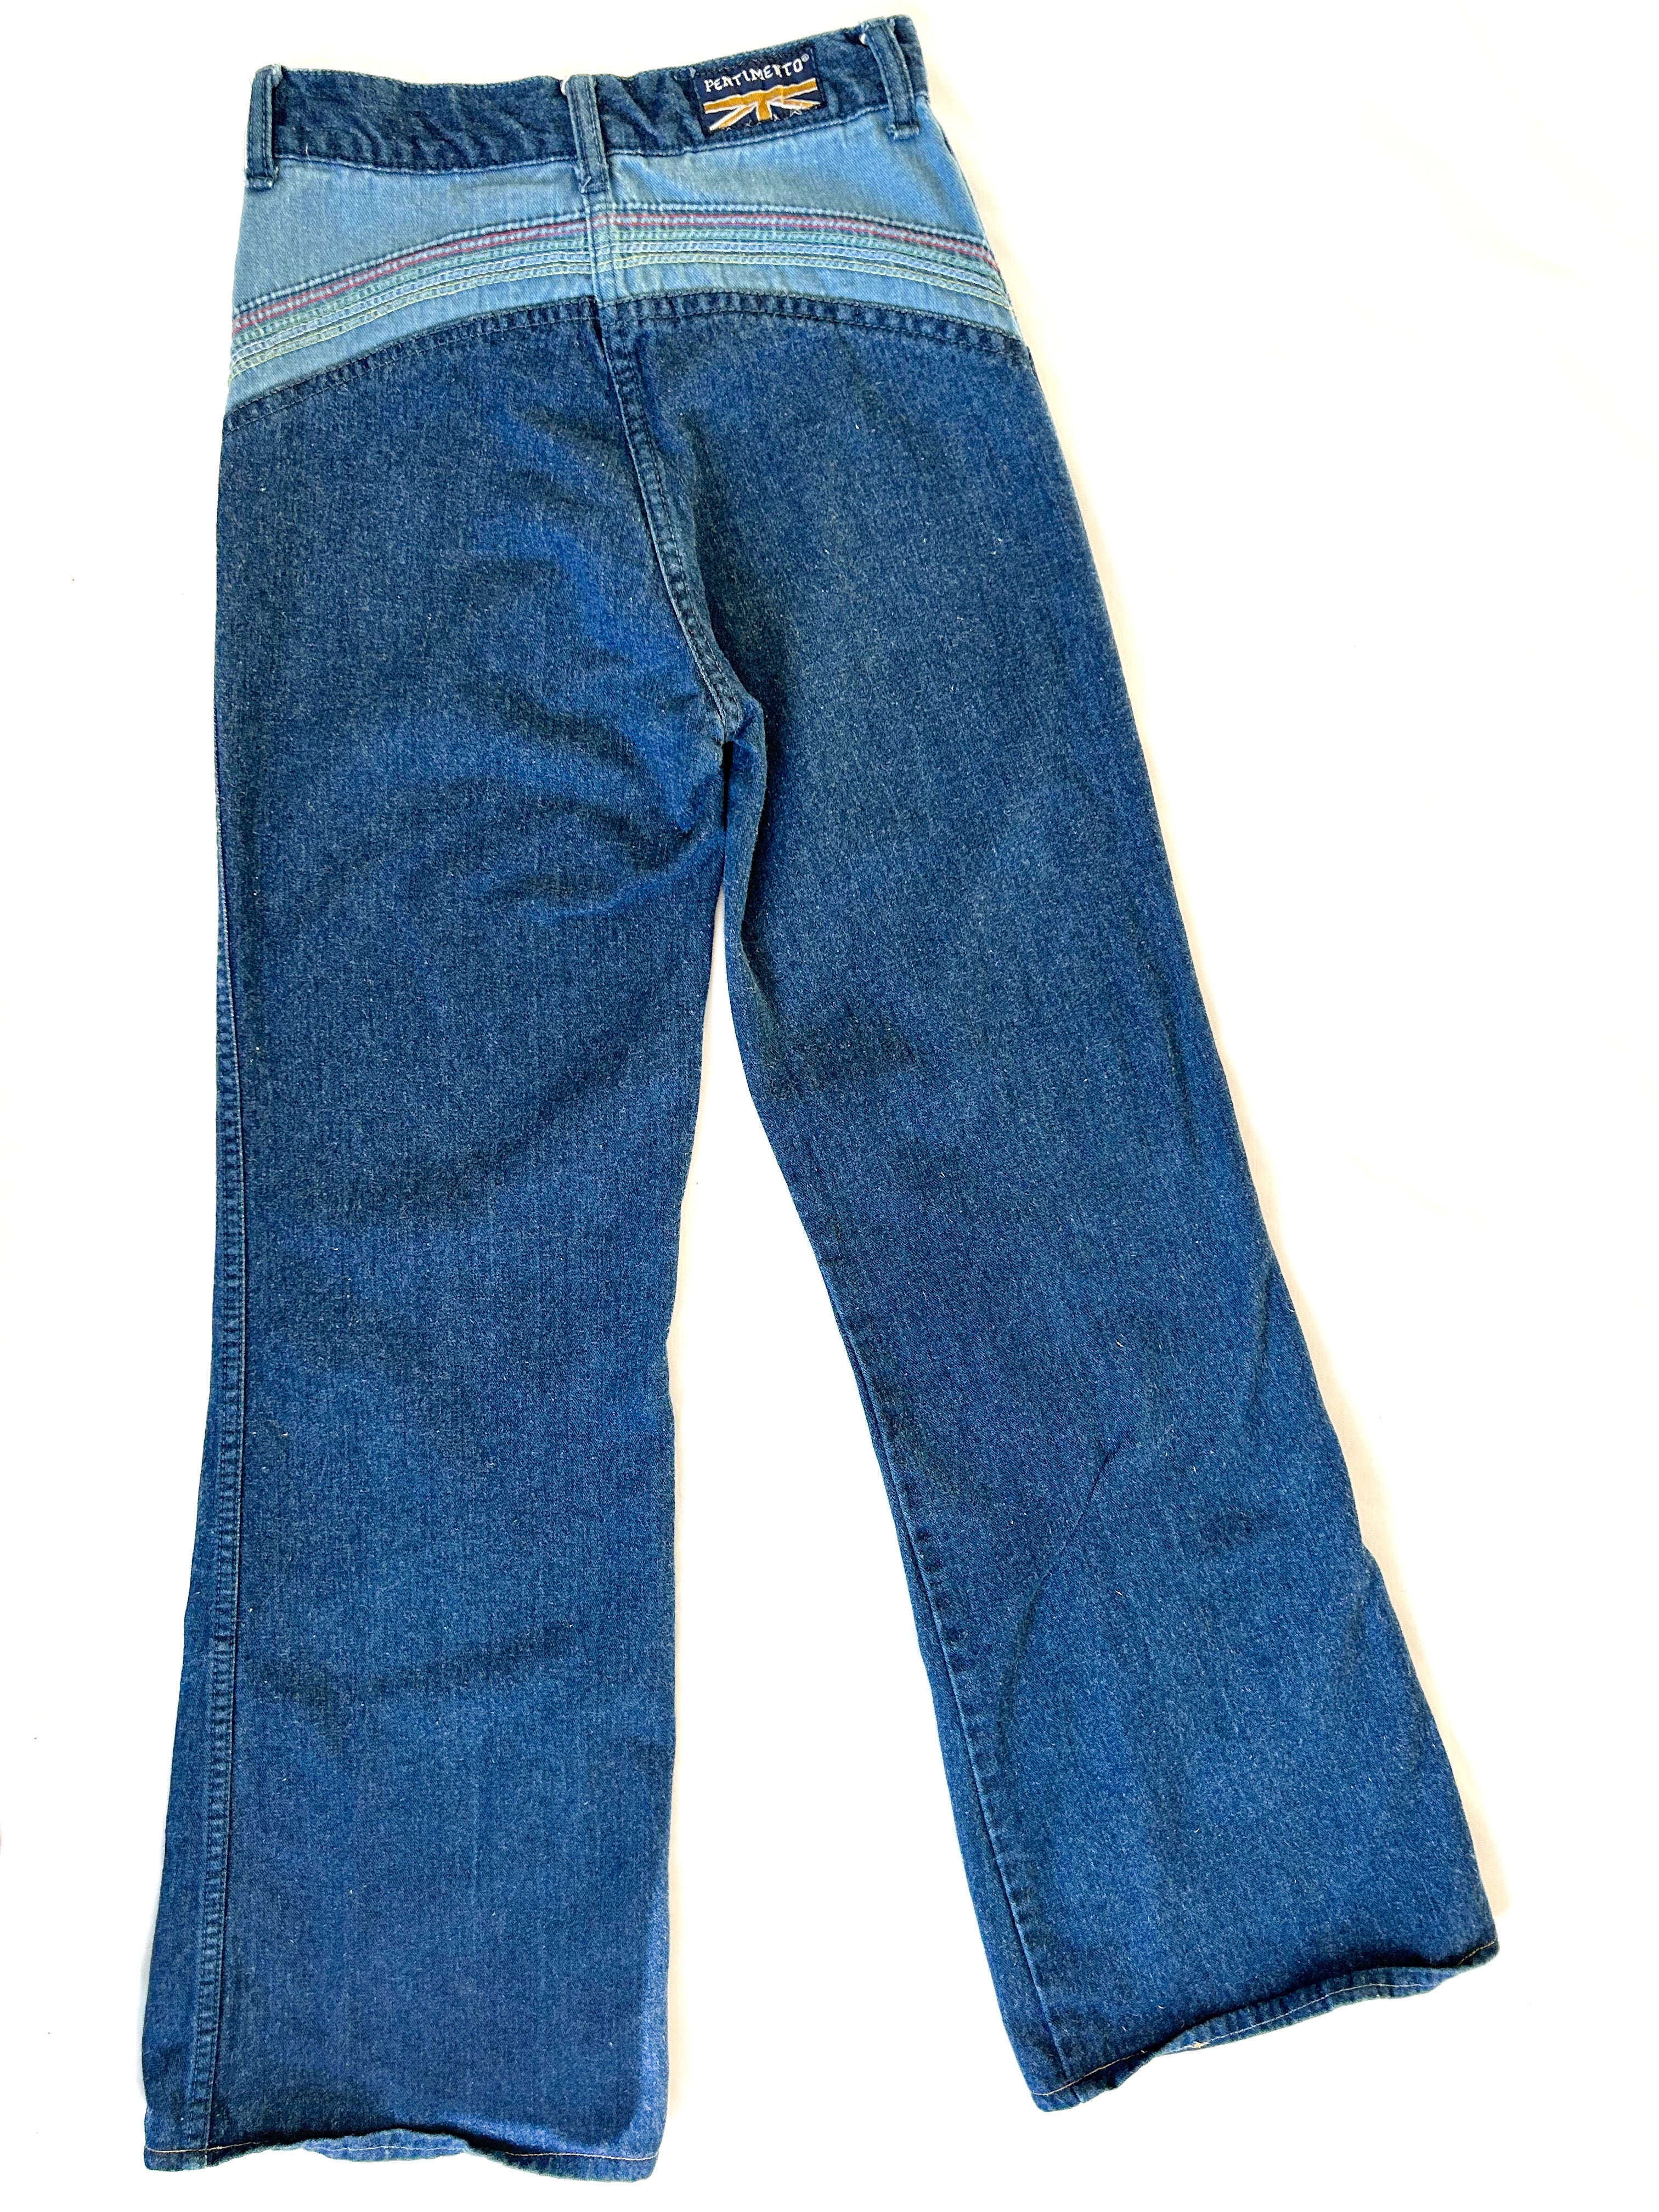 70s Vintage Rainbow Jeans, High Rise 26” Waist, Wide Leg with Rainbow Stitch Detail